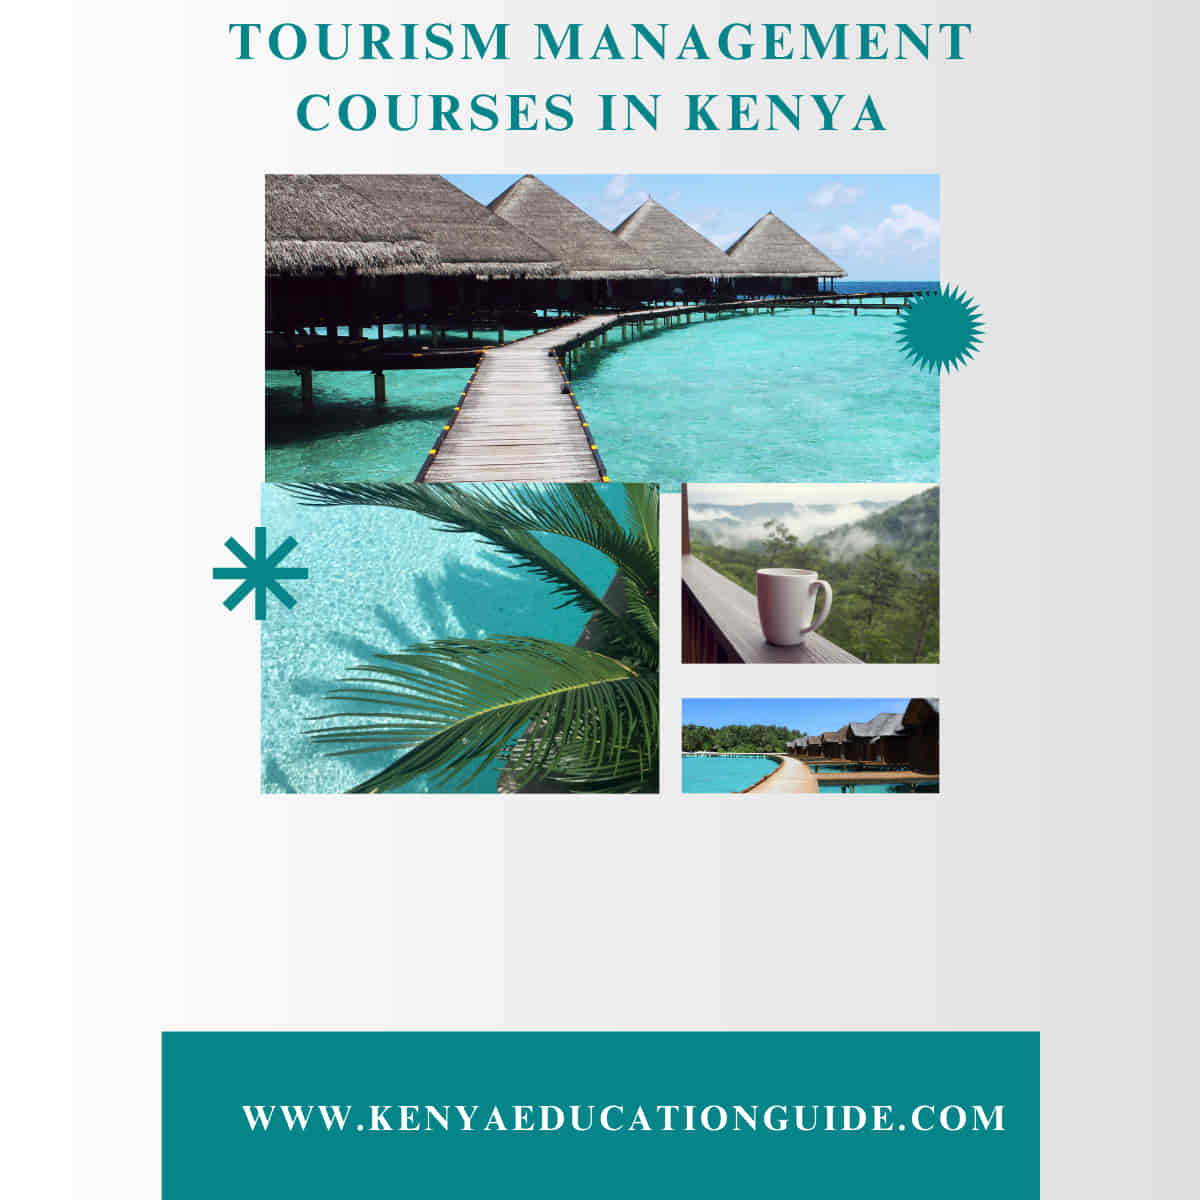 Tourism management courses in Kenya